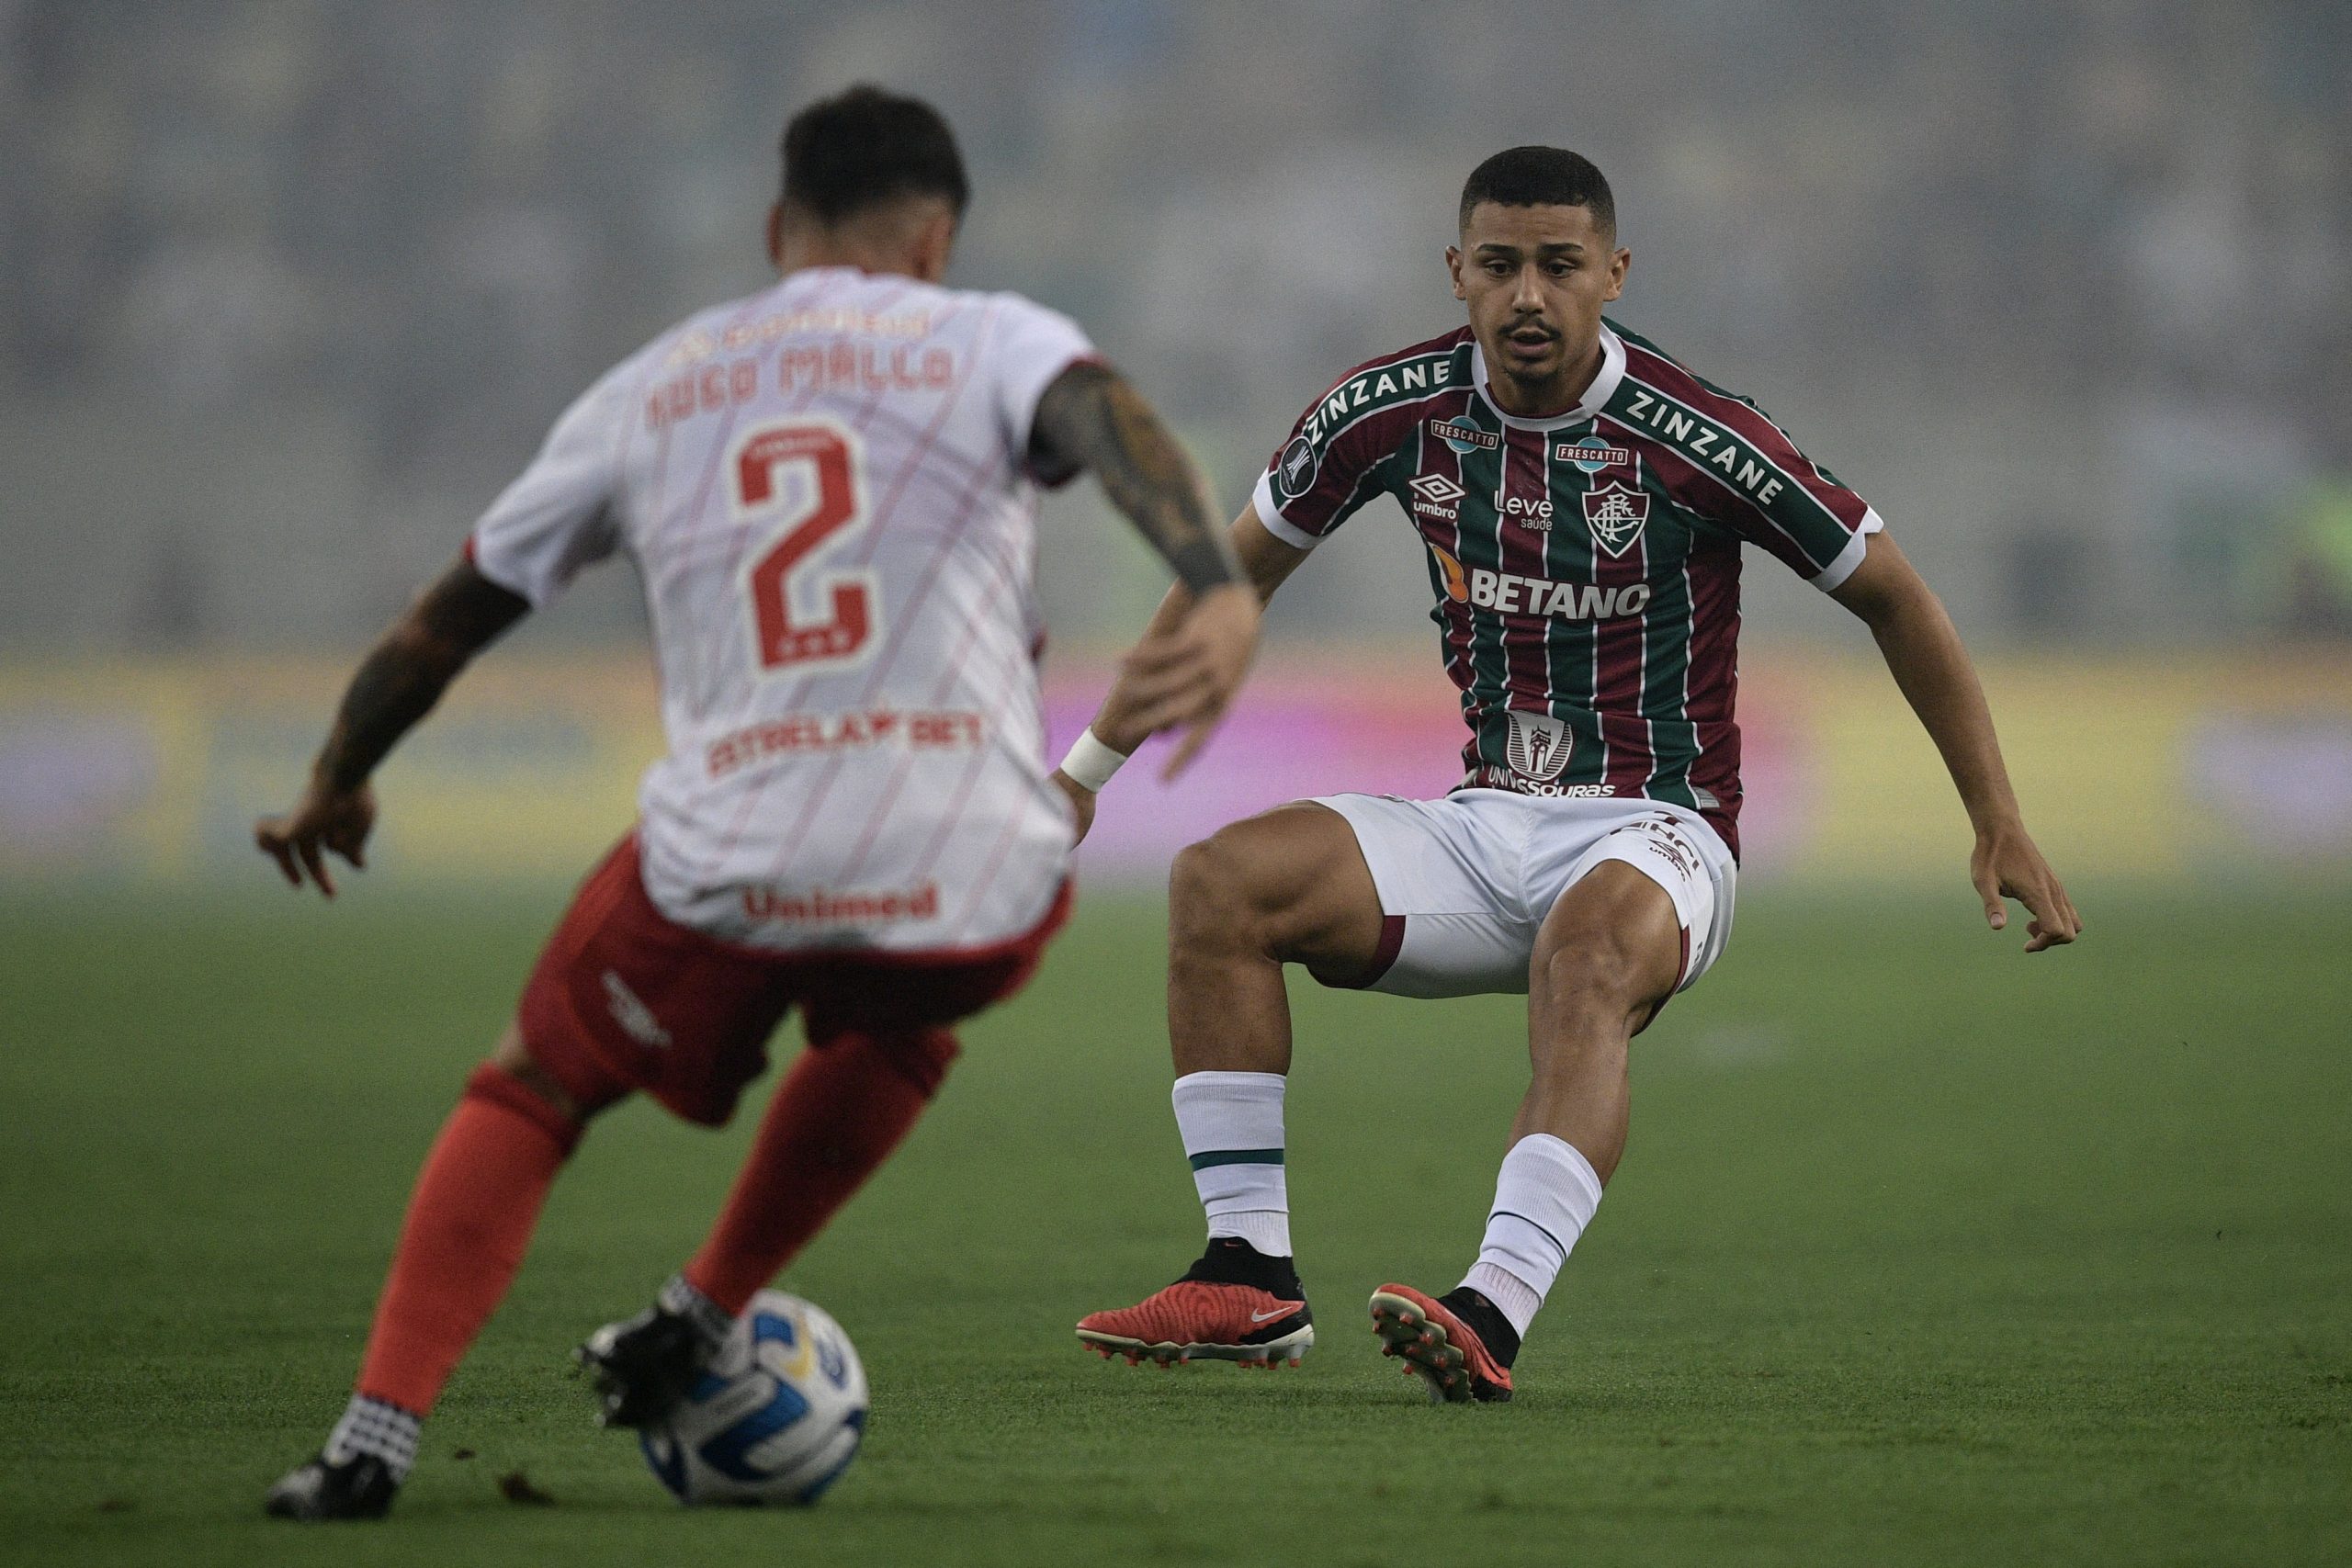 Internacional's Spanish defender Hugo Mallo and Fluminense's midfielder Andre Trindade fight for the ball.